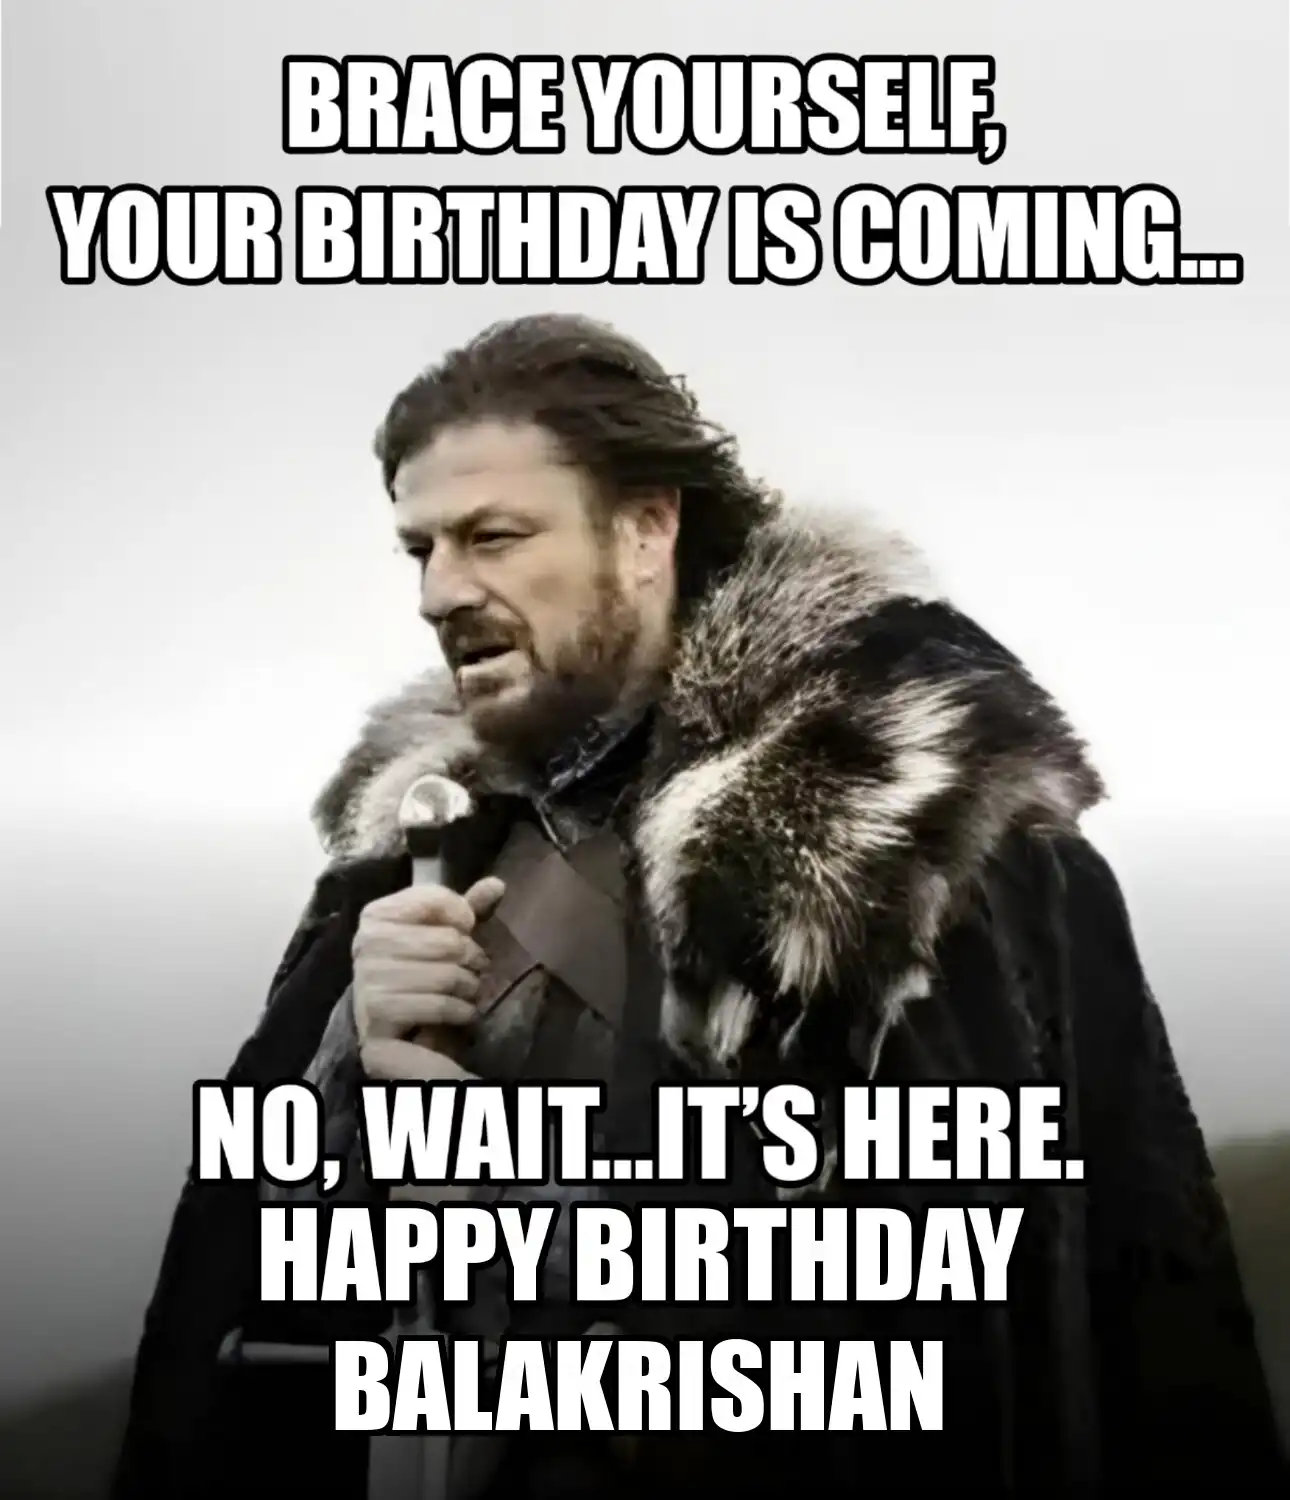 Happy Birthday Balakrishan Brace Yourself Your Birthday Is Coming Meme